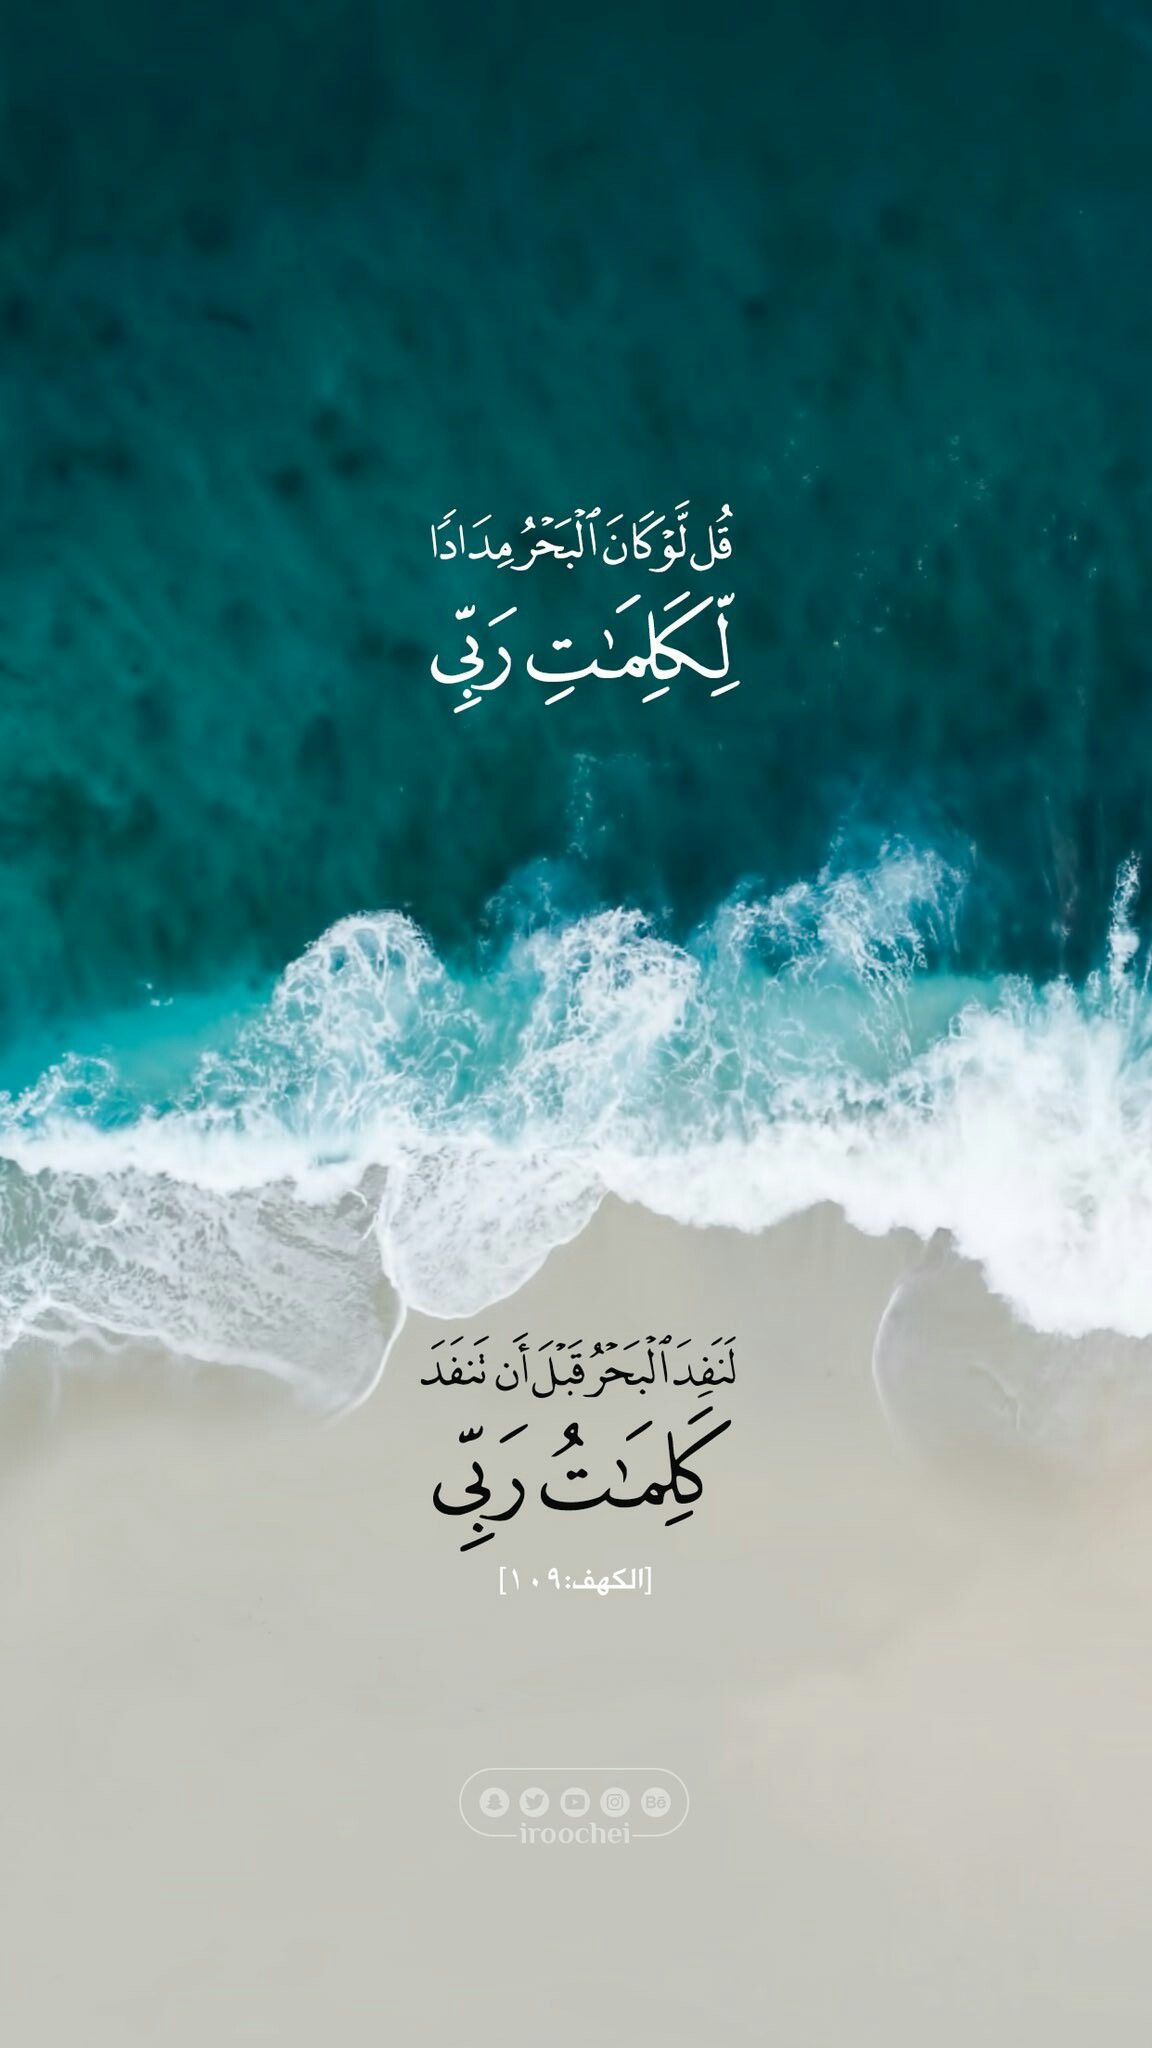 carta da parati islamica iphone,testo,font,turchese,cielo,onda